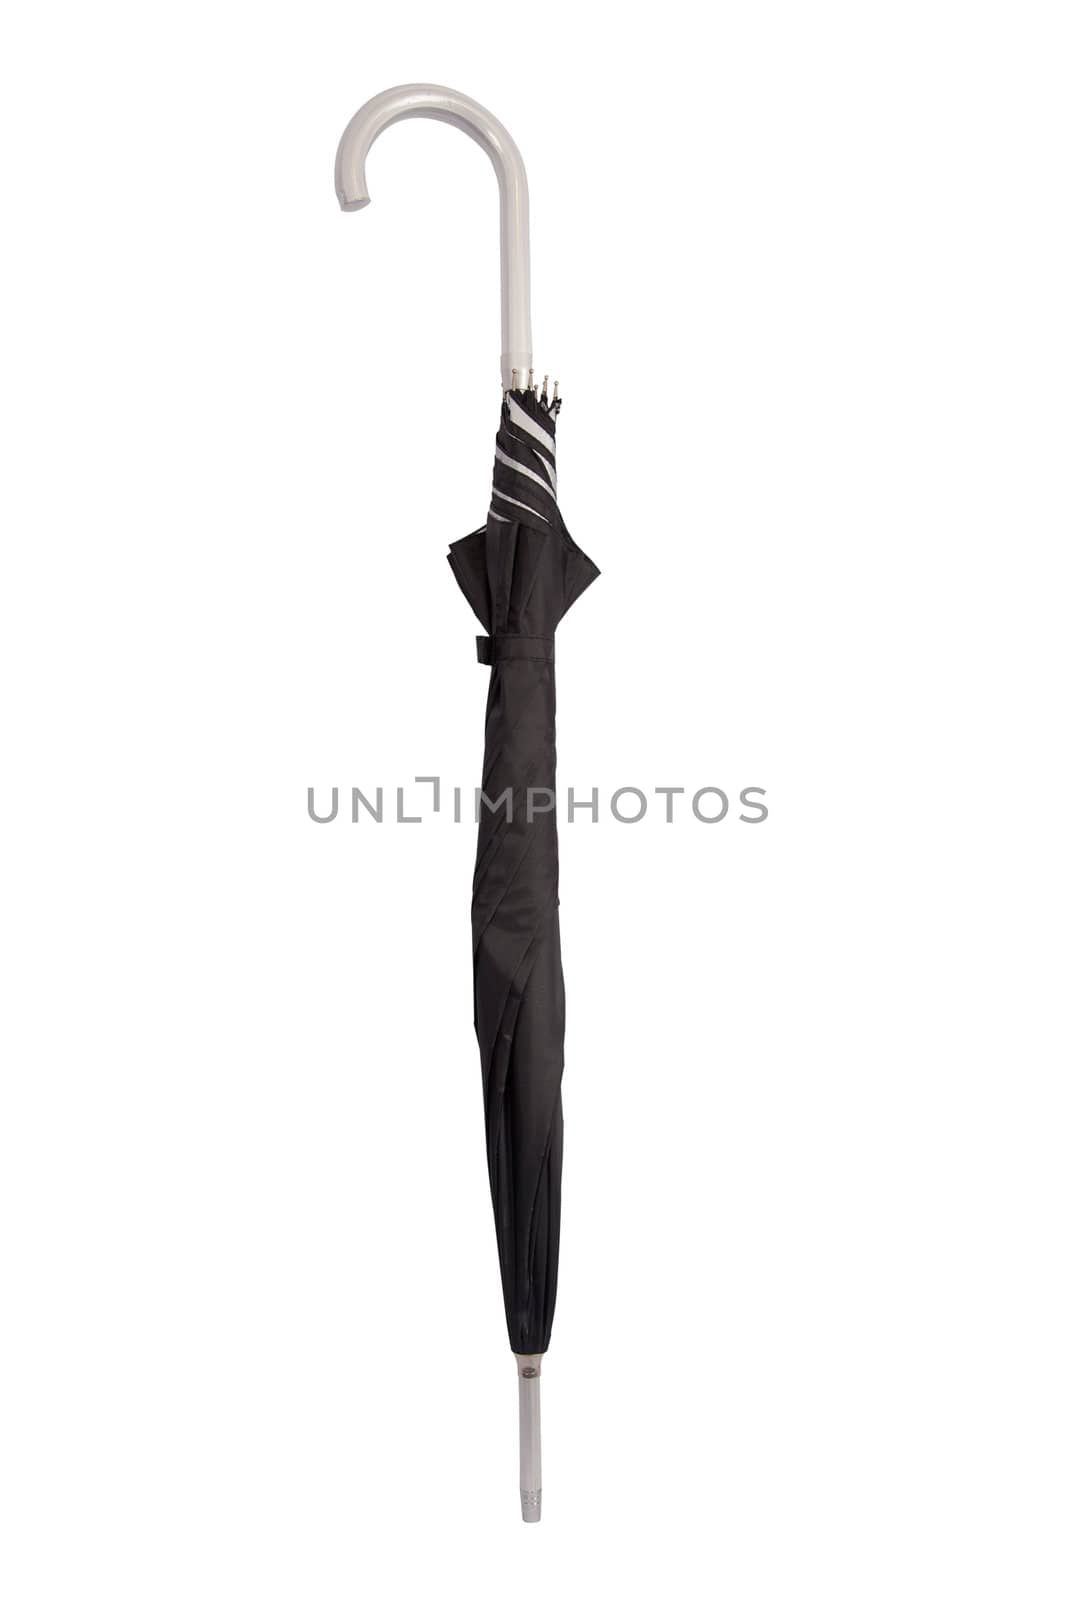 Closed black umbrella isolated on white